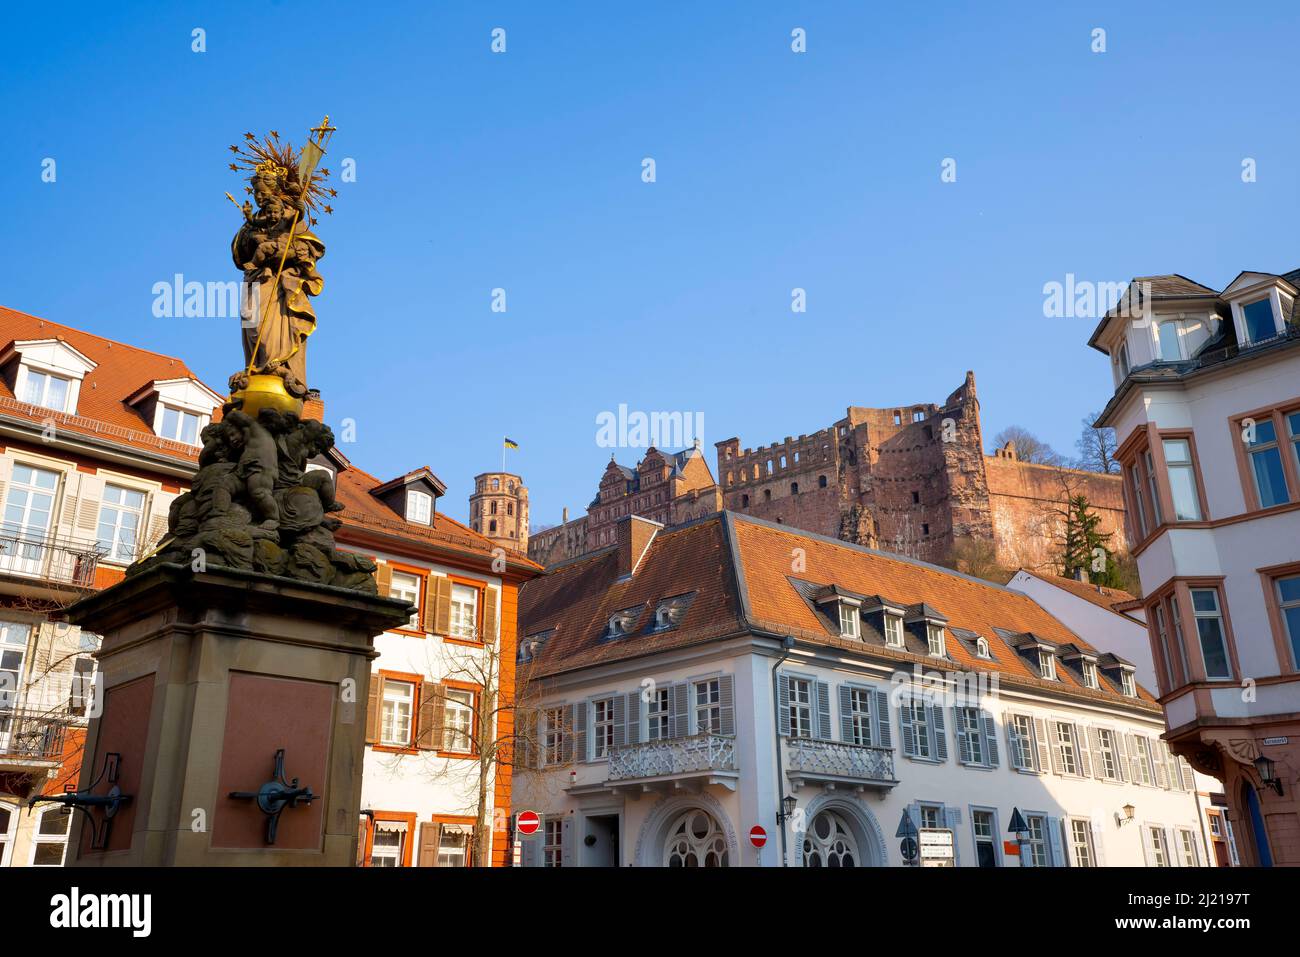 Mary column on the grain market, Heidelberg is a town on the Neckar River, Baden Württemberg in southwestern Germany. Stock Photo